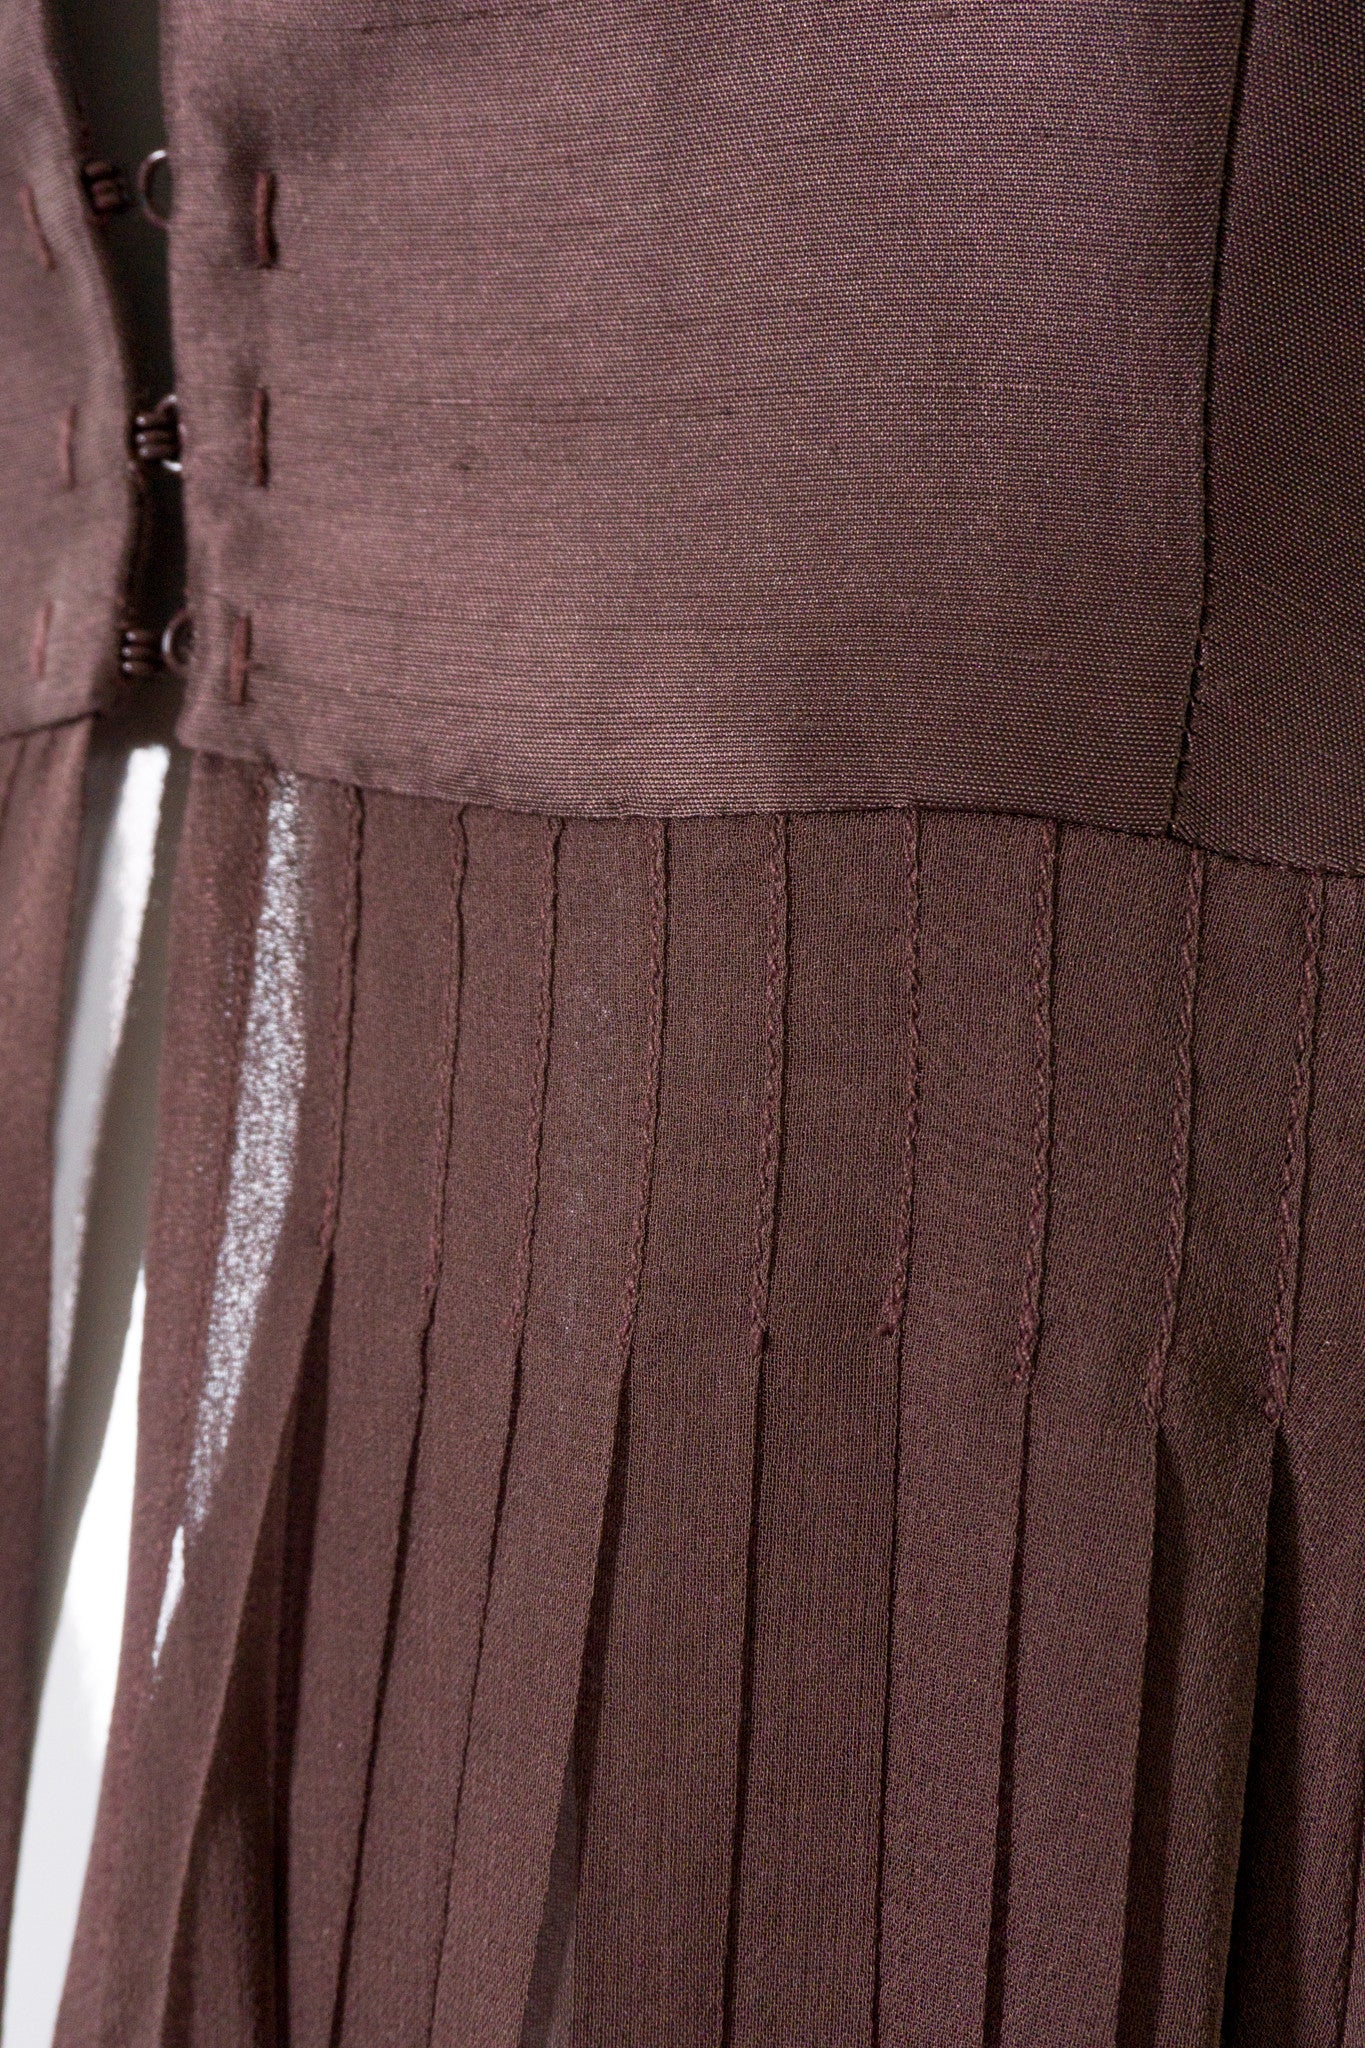 Morgane Le Fay Sheer Silk Vest Bodice Dress